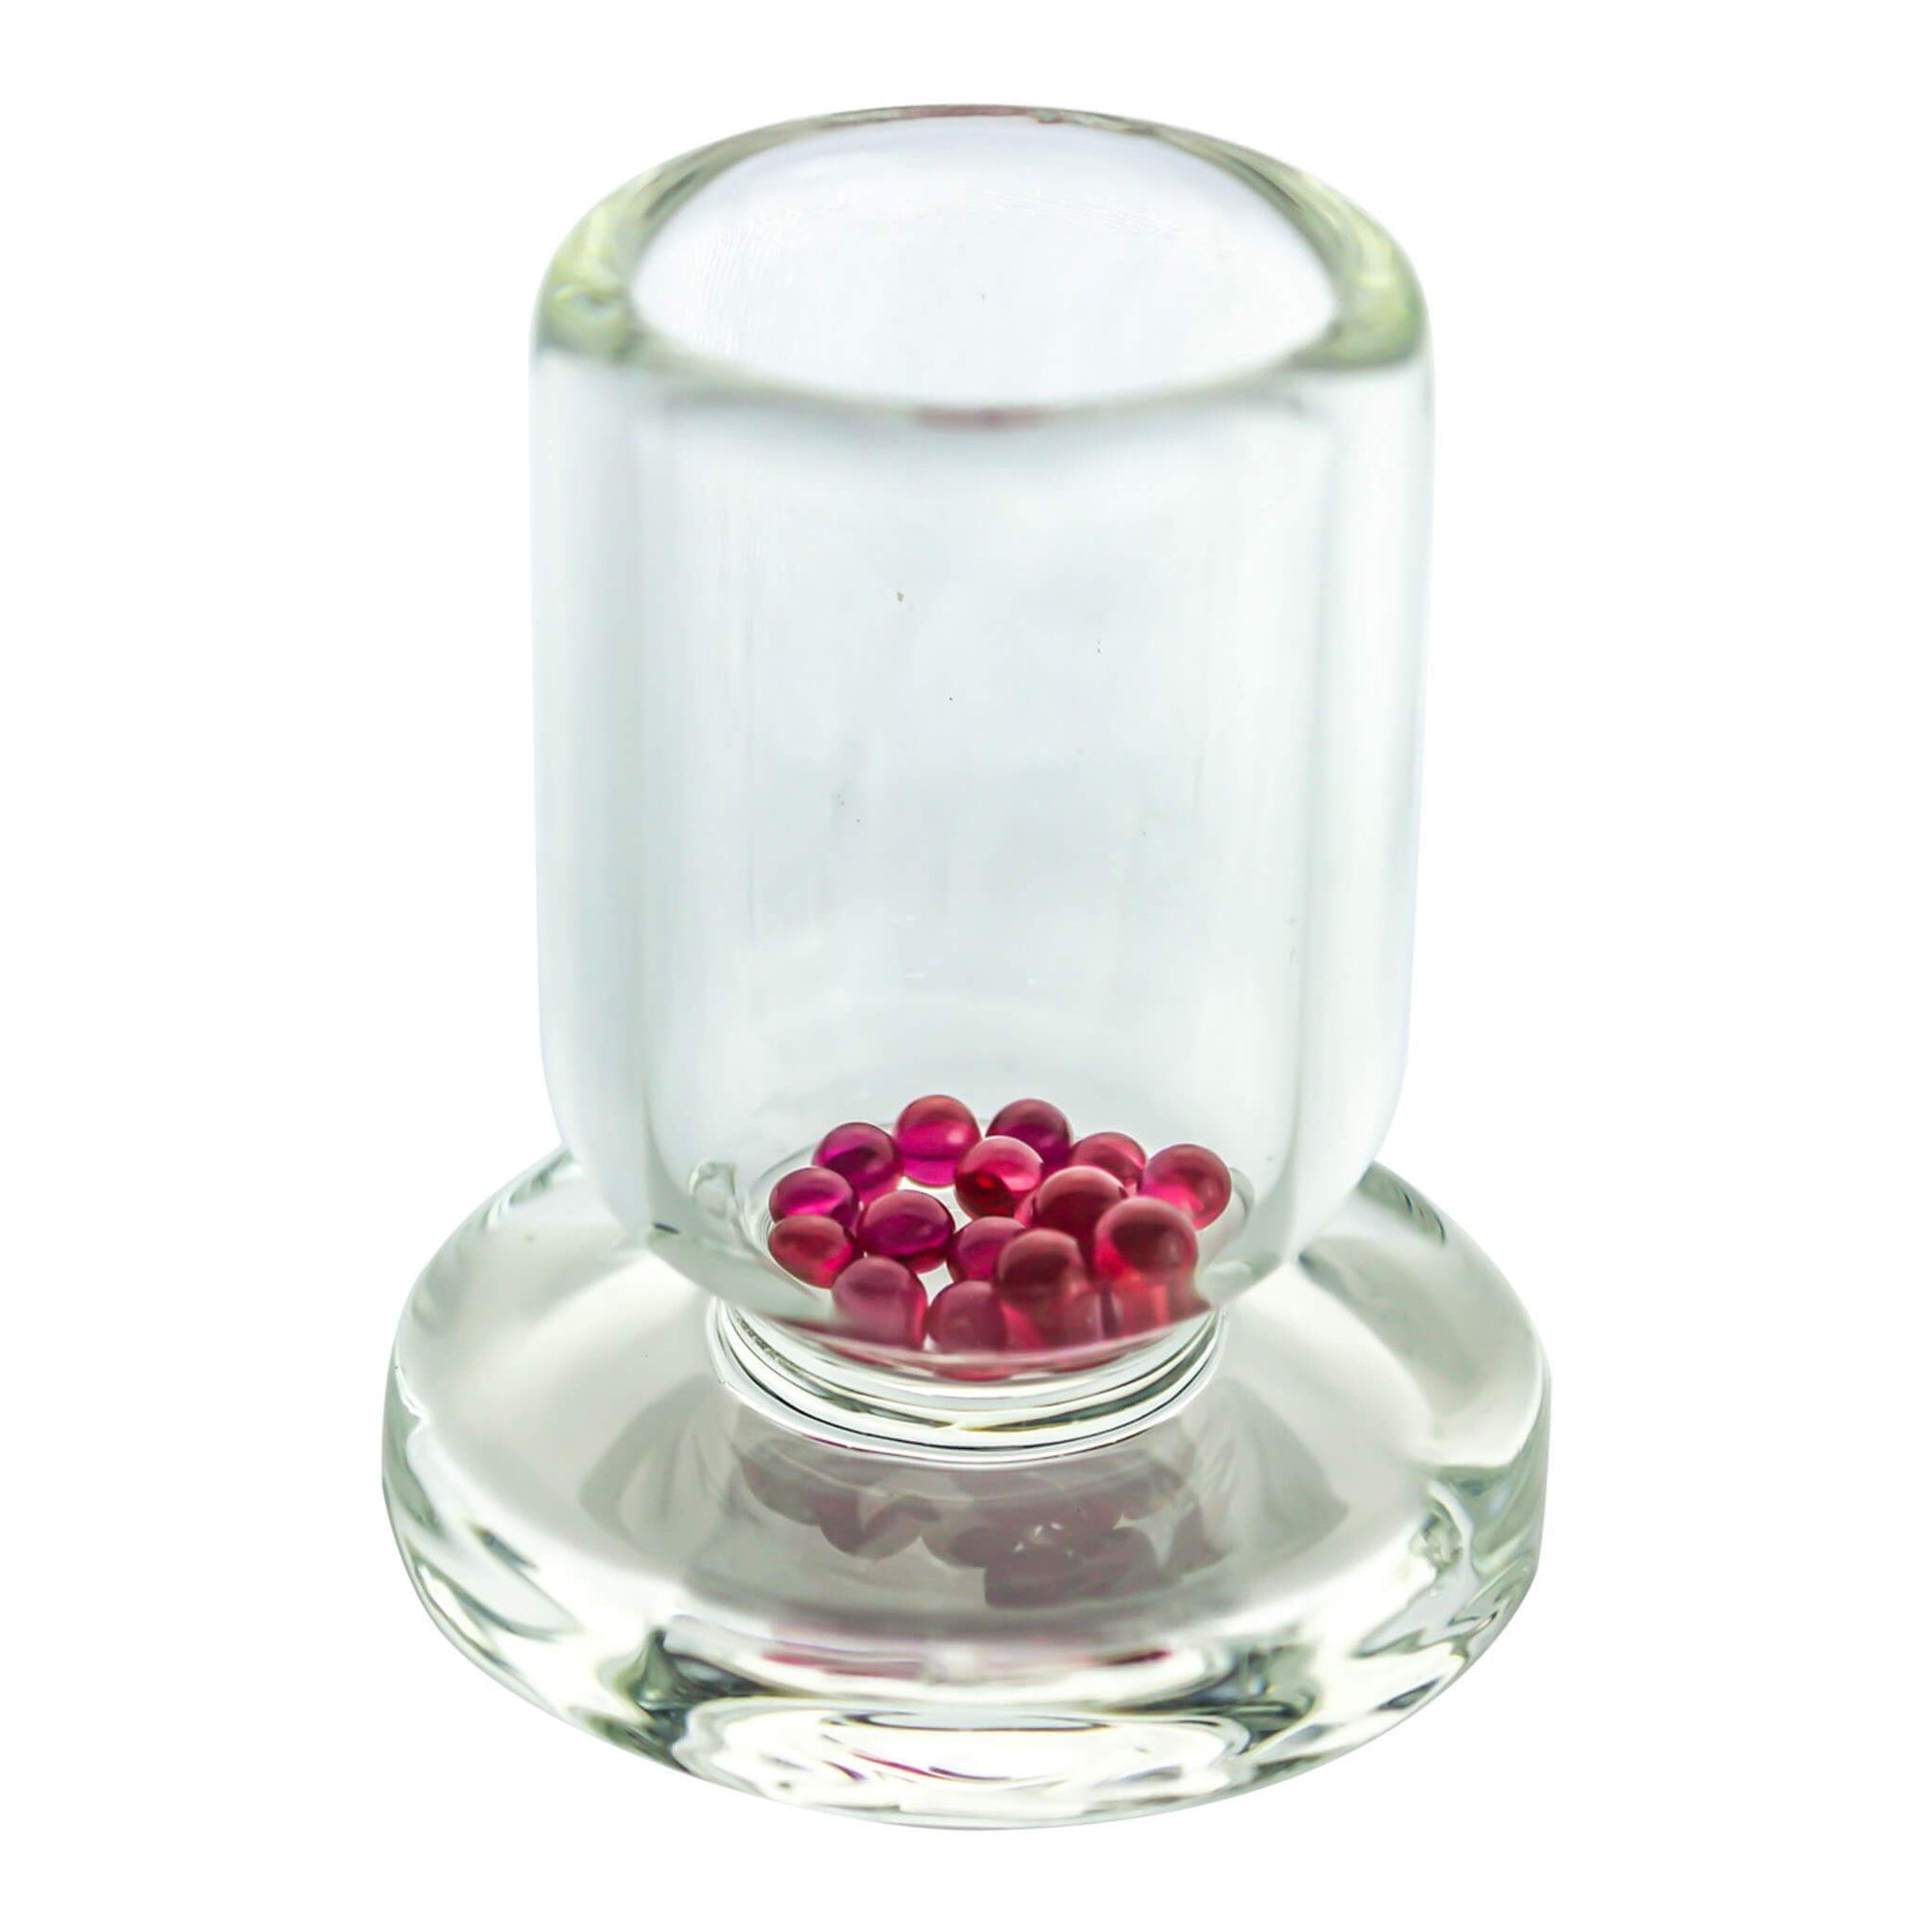 3mm Terp Pearls-Ruby | Terp Pearls In Banger View | DW